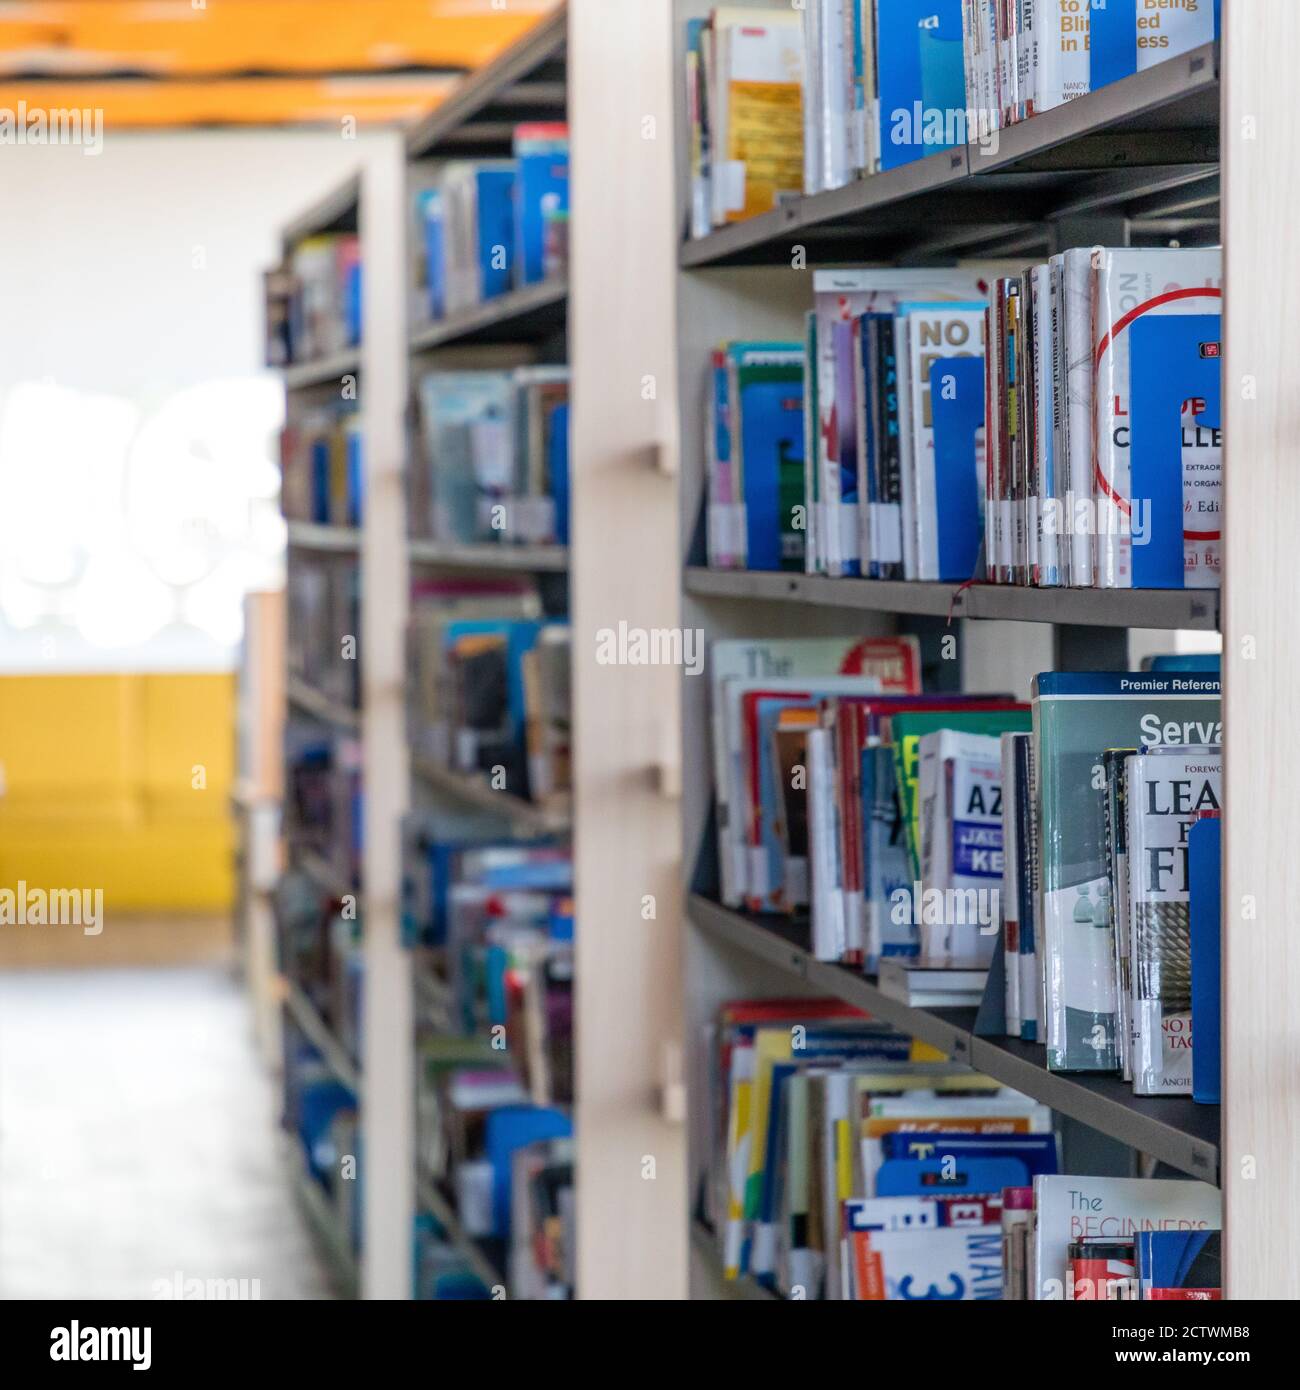 Kota Kinabalu, Sabah, Malaysia: Book shelves and books of the new Sabah Regional Library at Tanjung Aru Plaza, Kota Kinabalu, opened on April 1 2019. Stock Photo